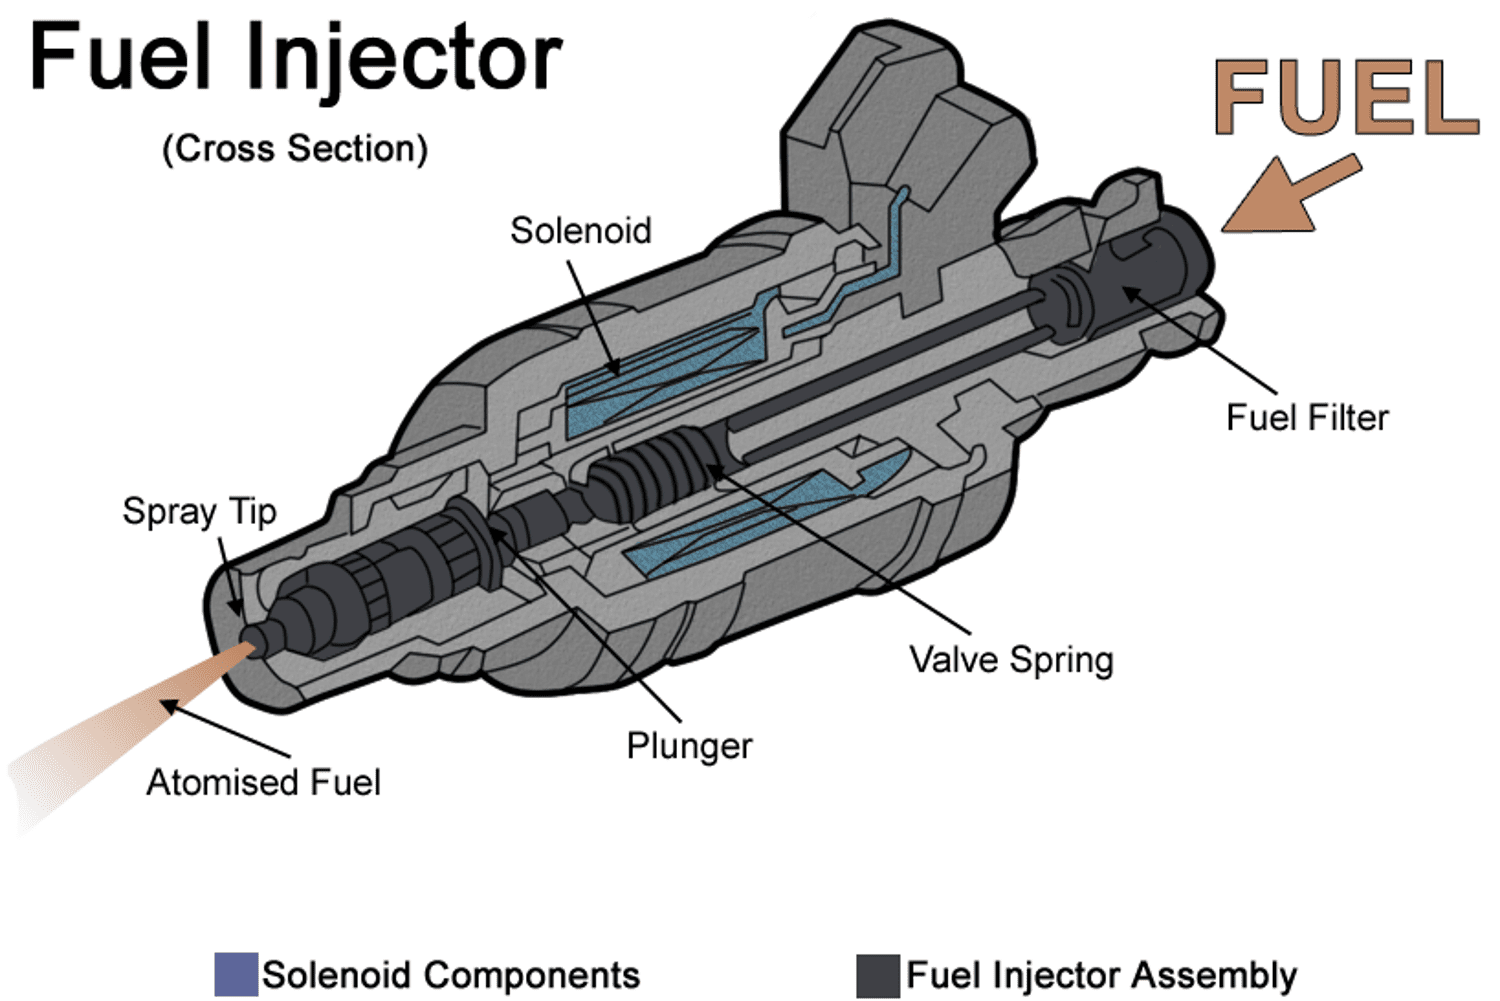 Fuel Injector